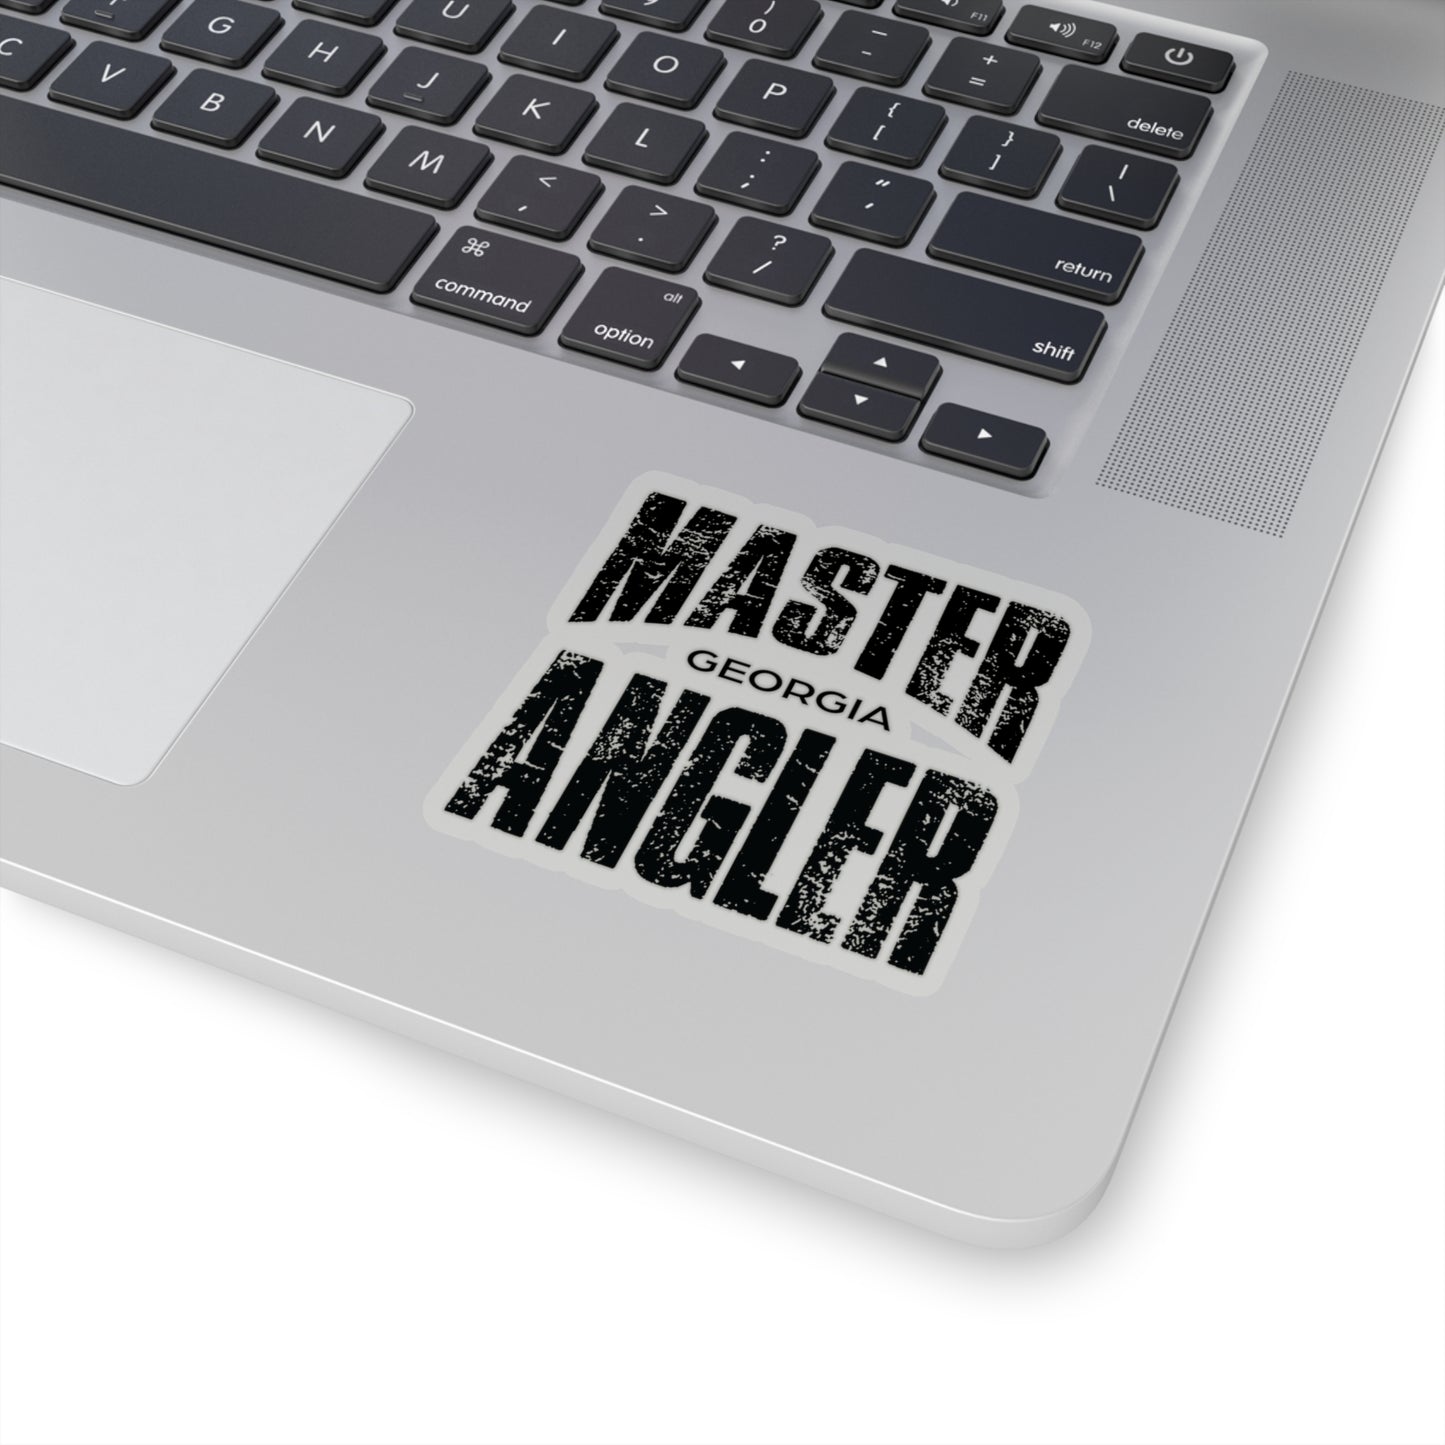 Georgia Master Angler Sticker - BLACK